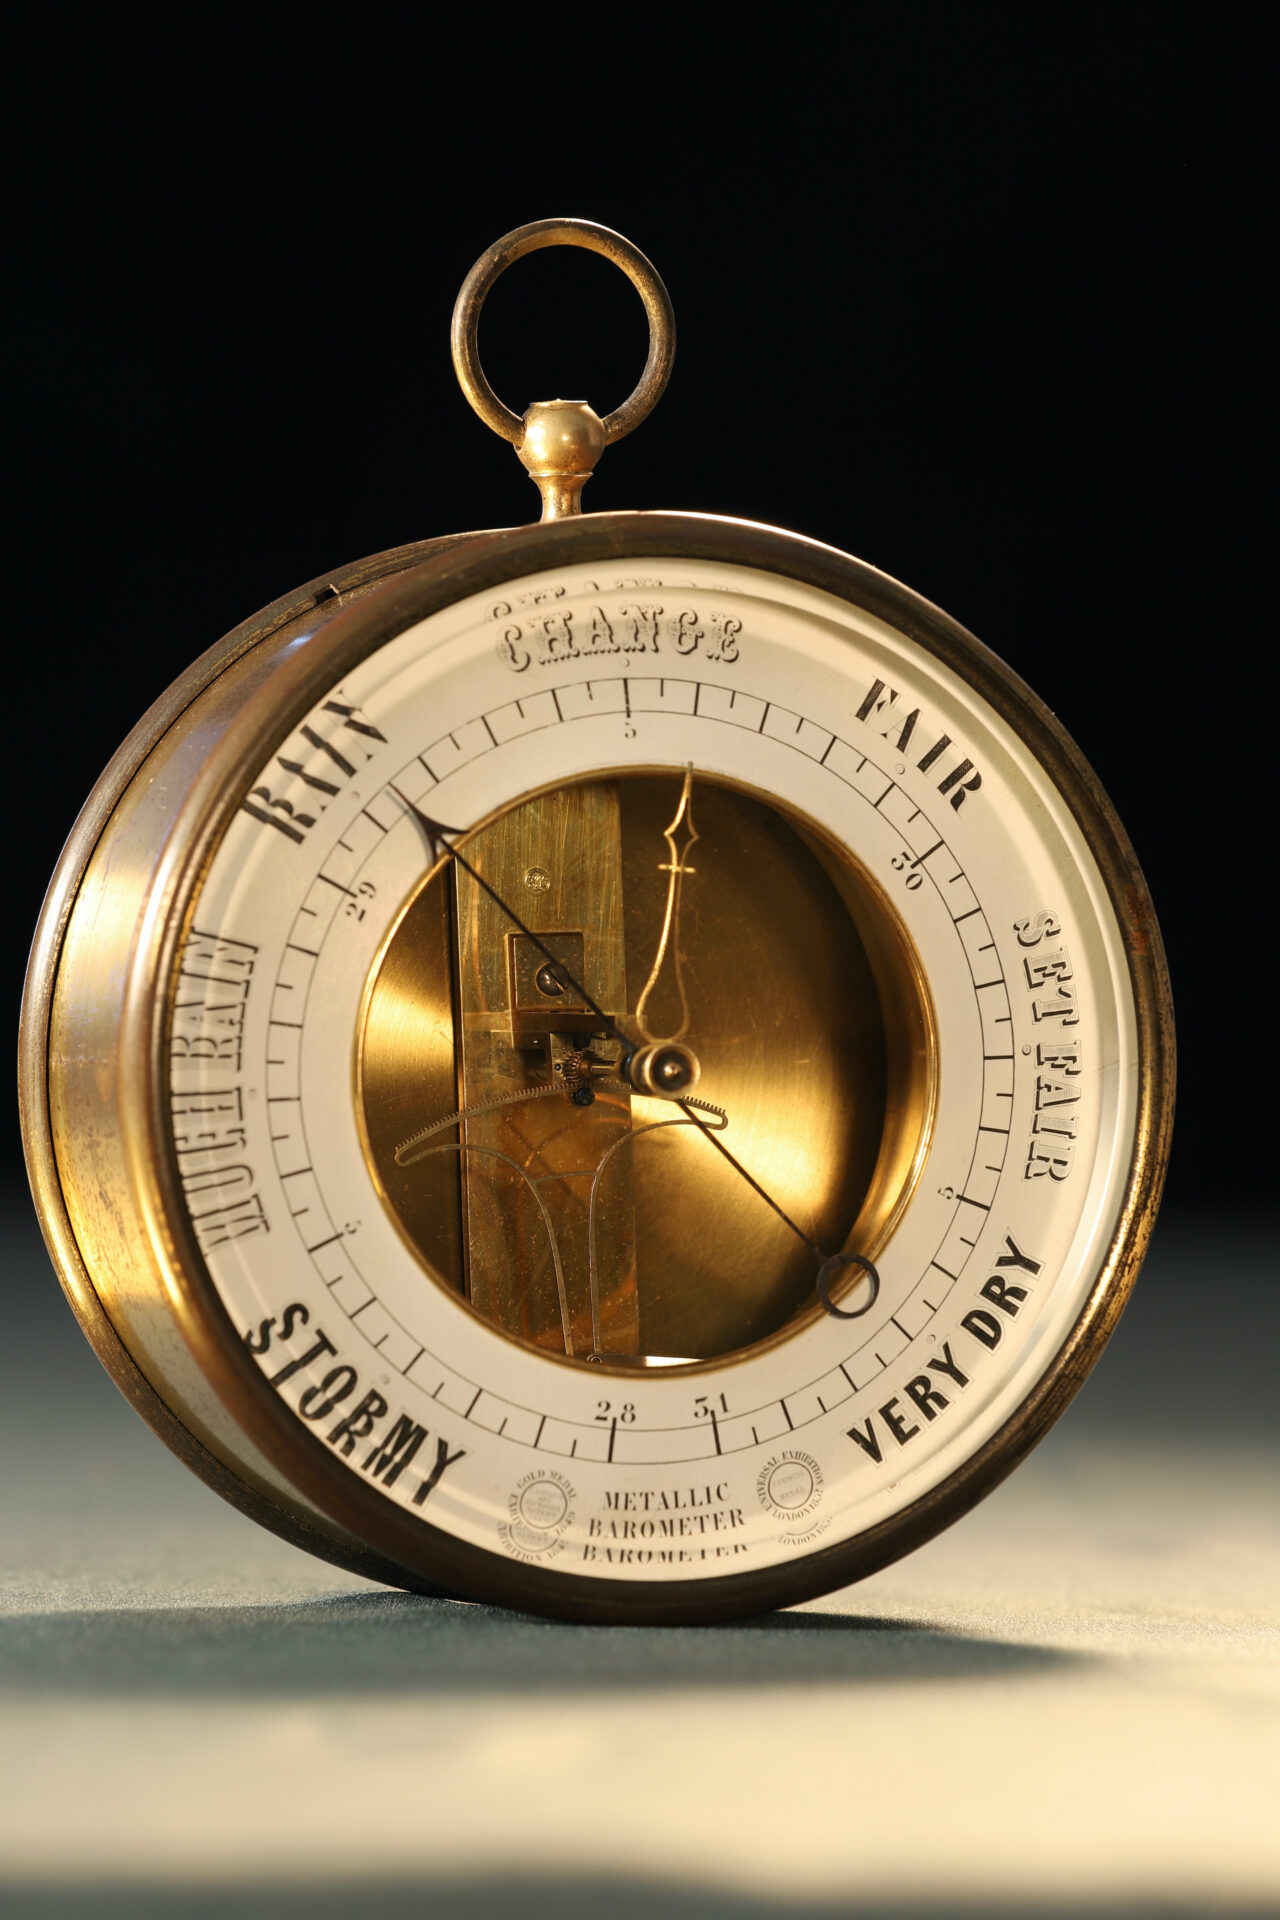 Image of Bourdon & Richard Barometer No 8138 c1860 taken from lefthand side